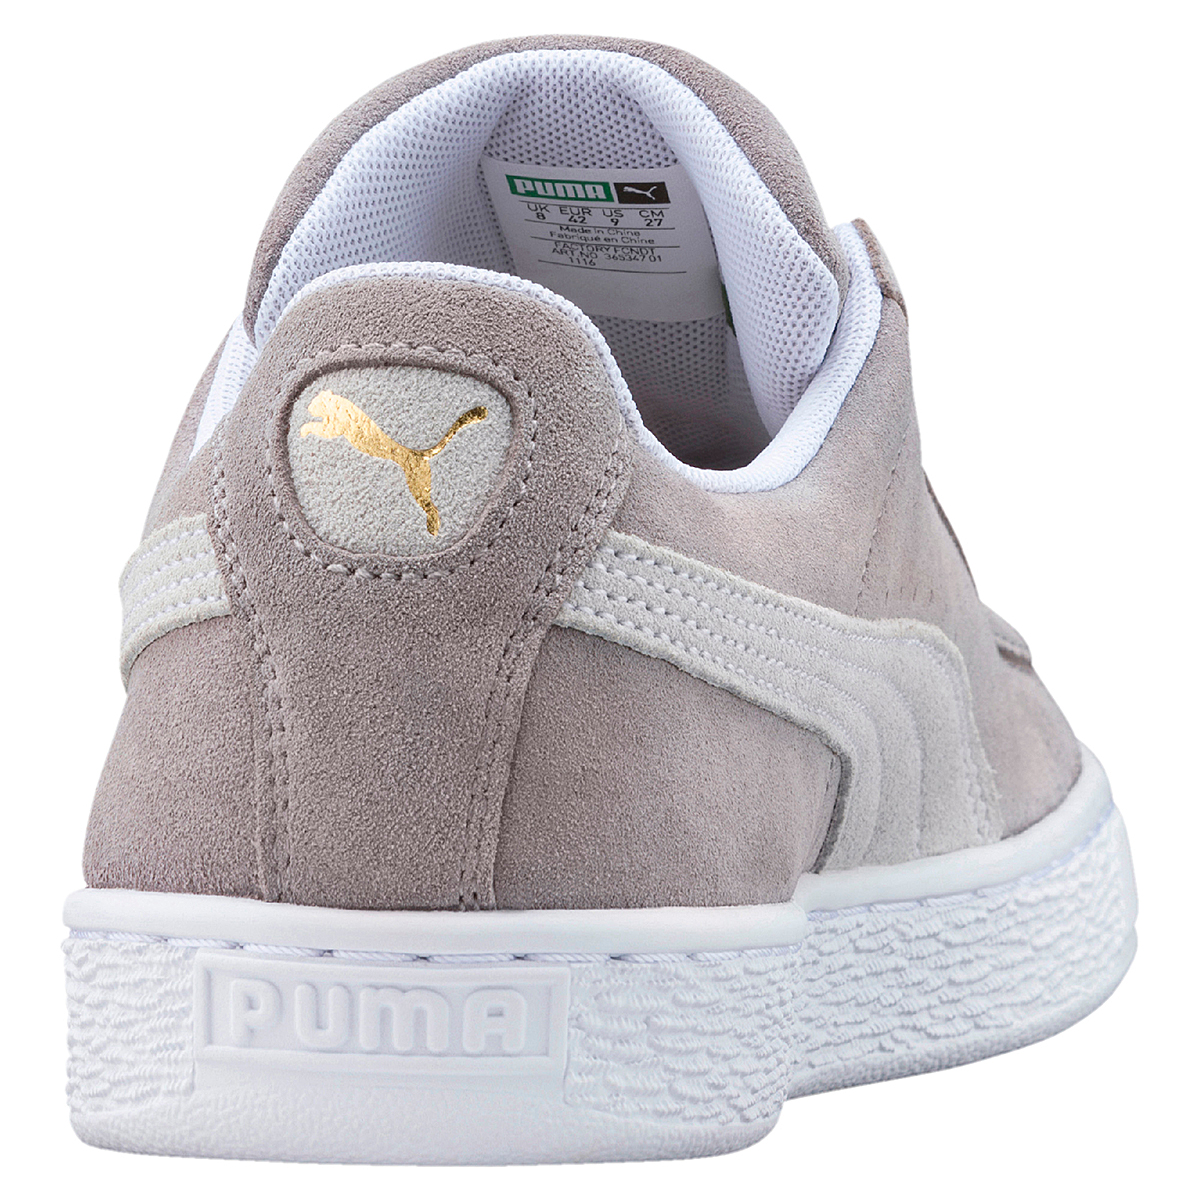 Puma Suede Classic JR Kinder Sneaker Low-Top grau 365073 14